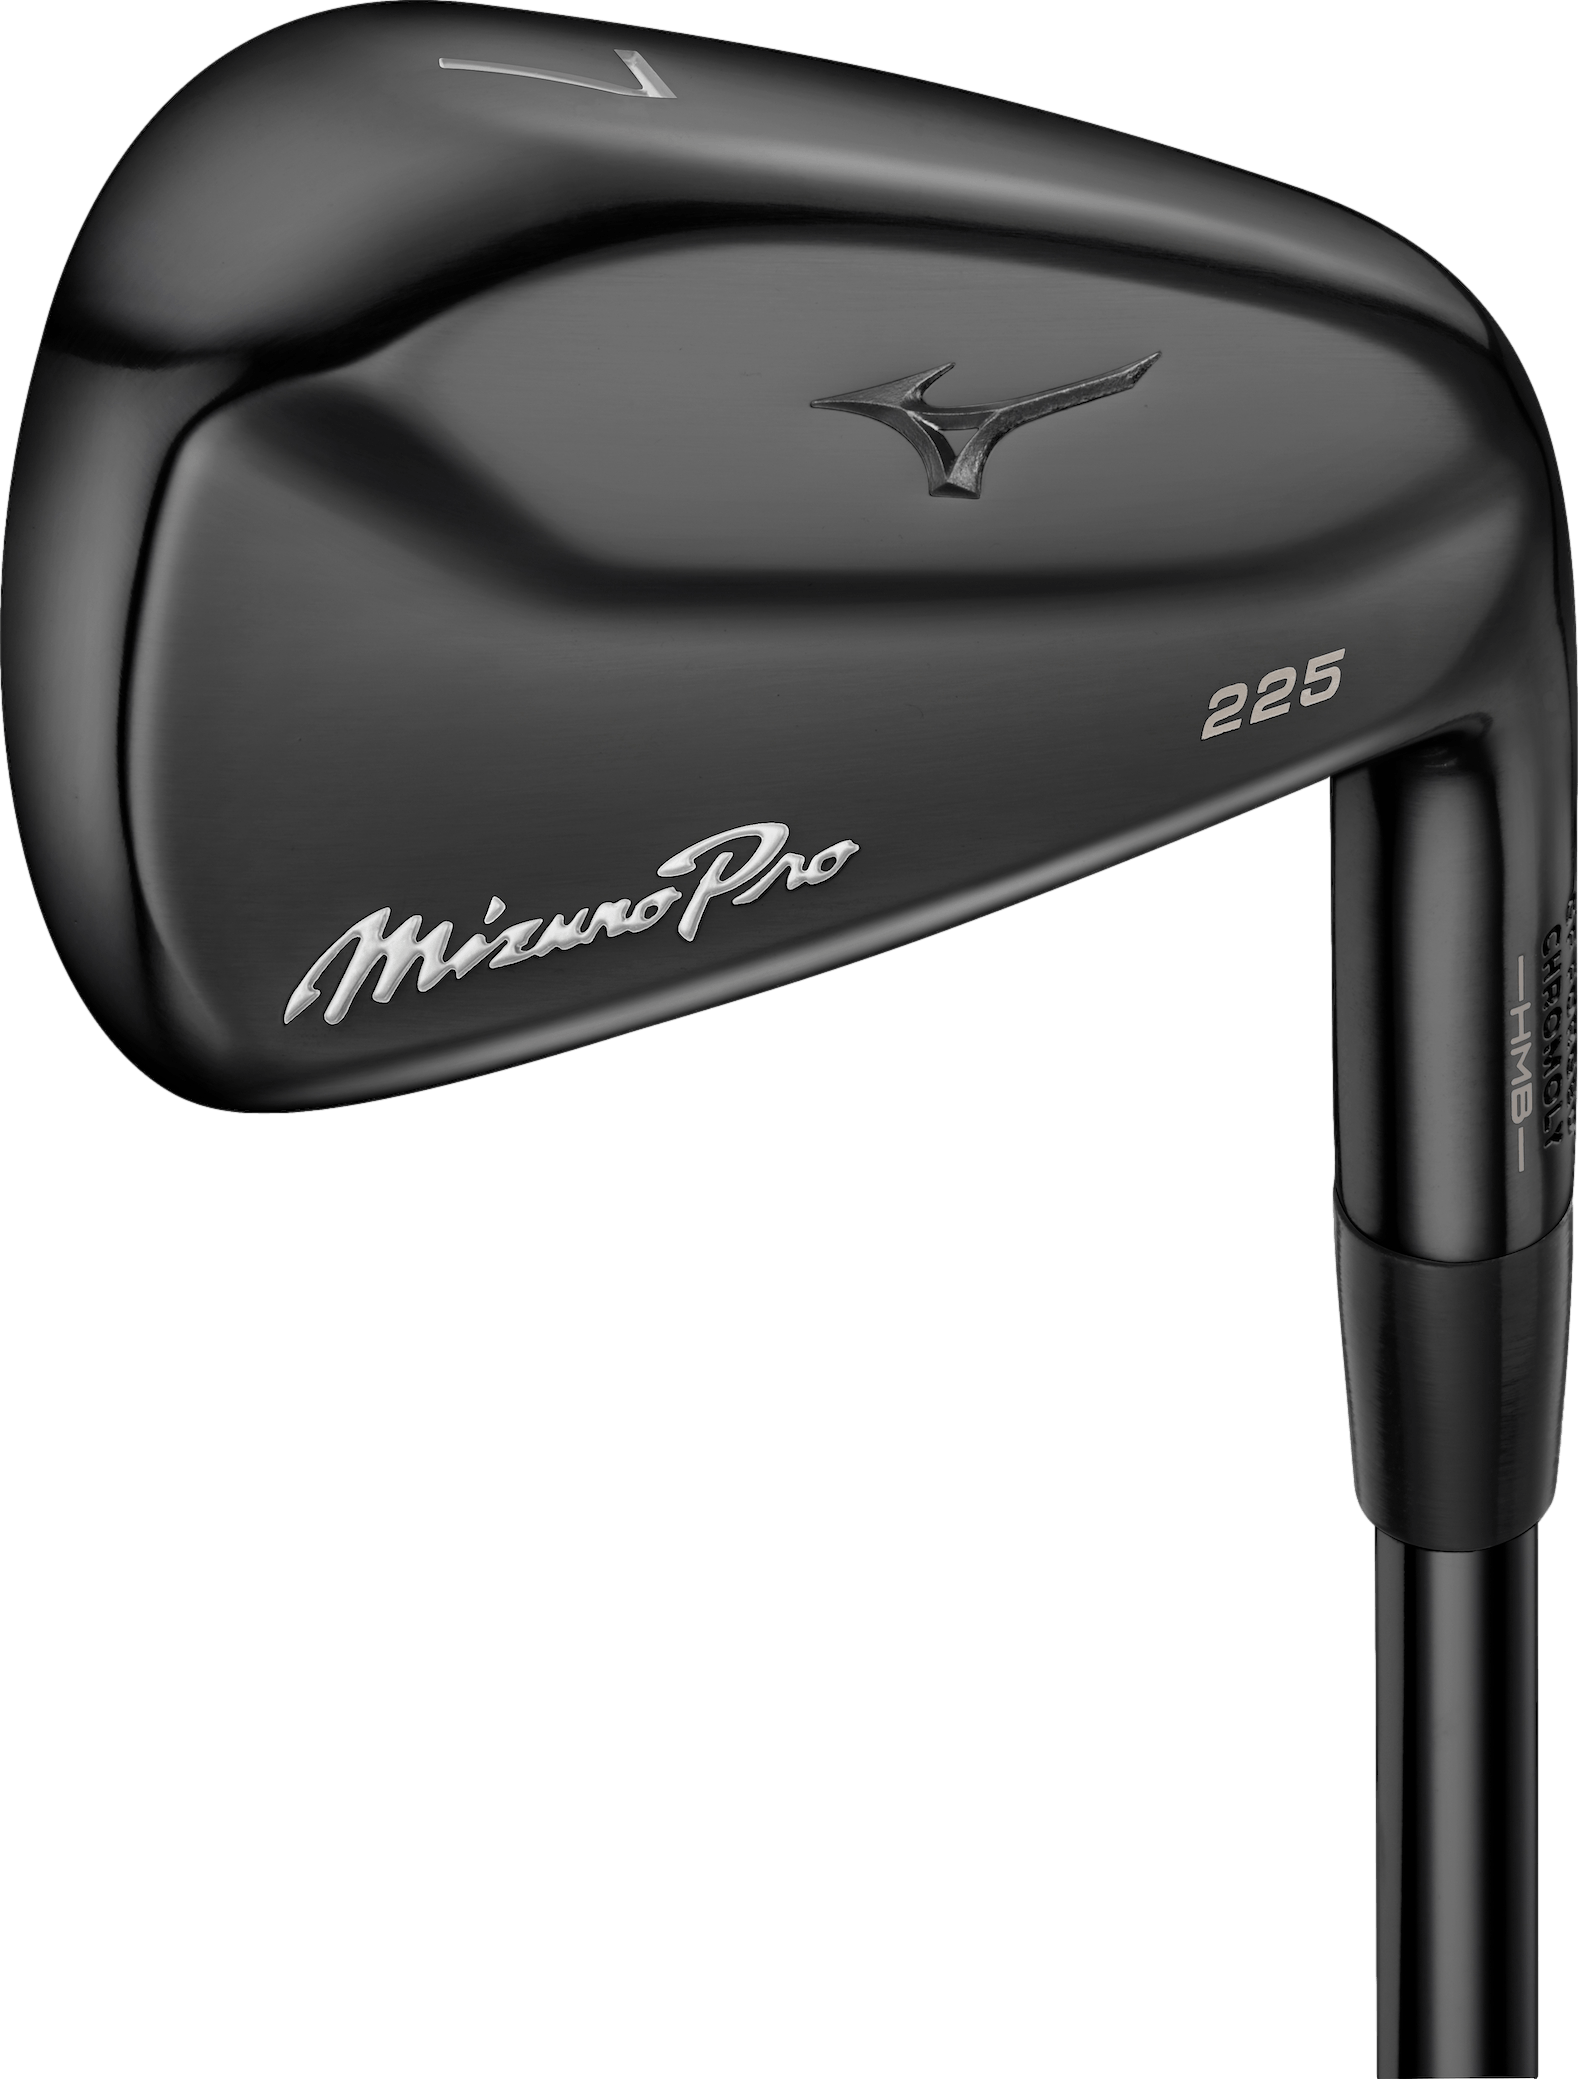 Mizuno Pro 225 Black Iron Set | Curated.com